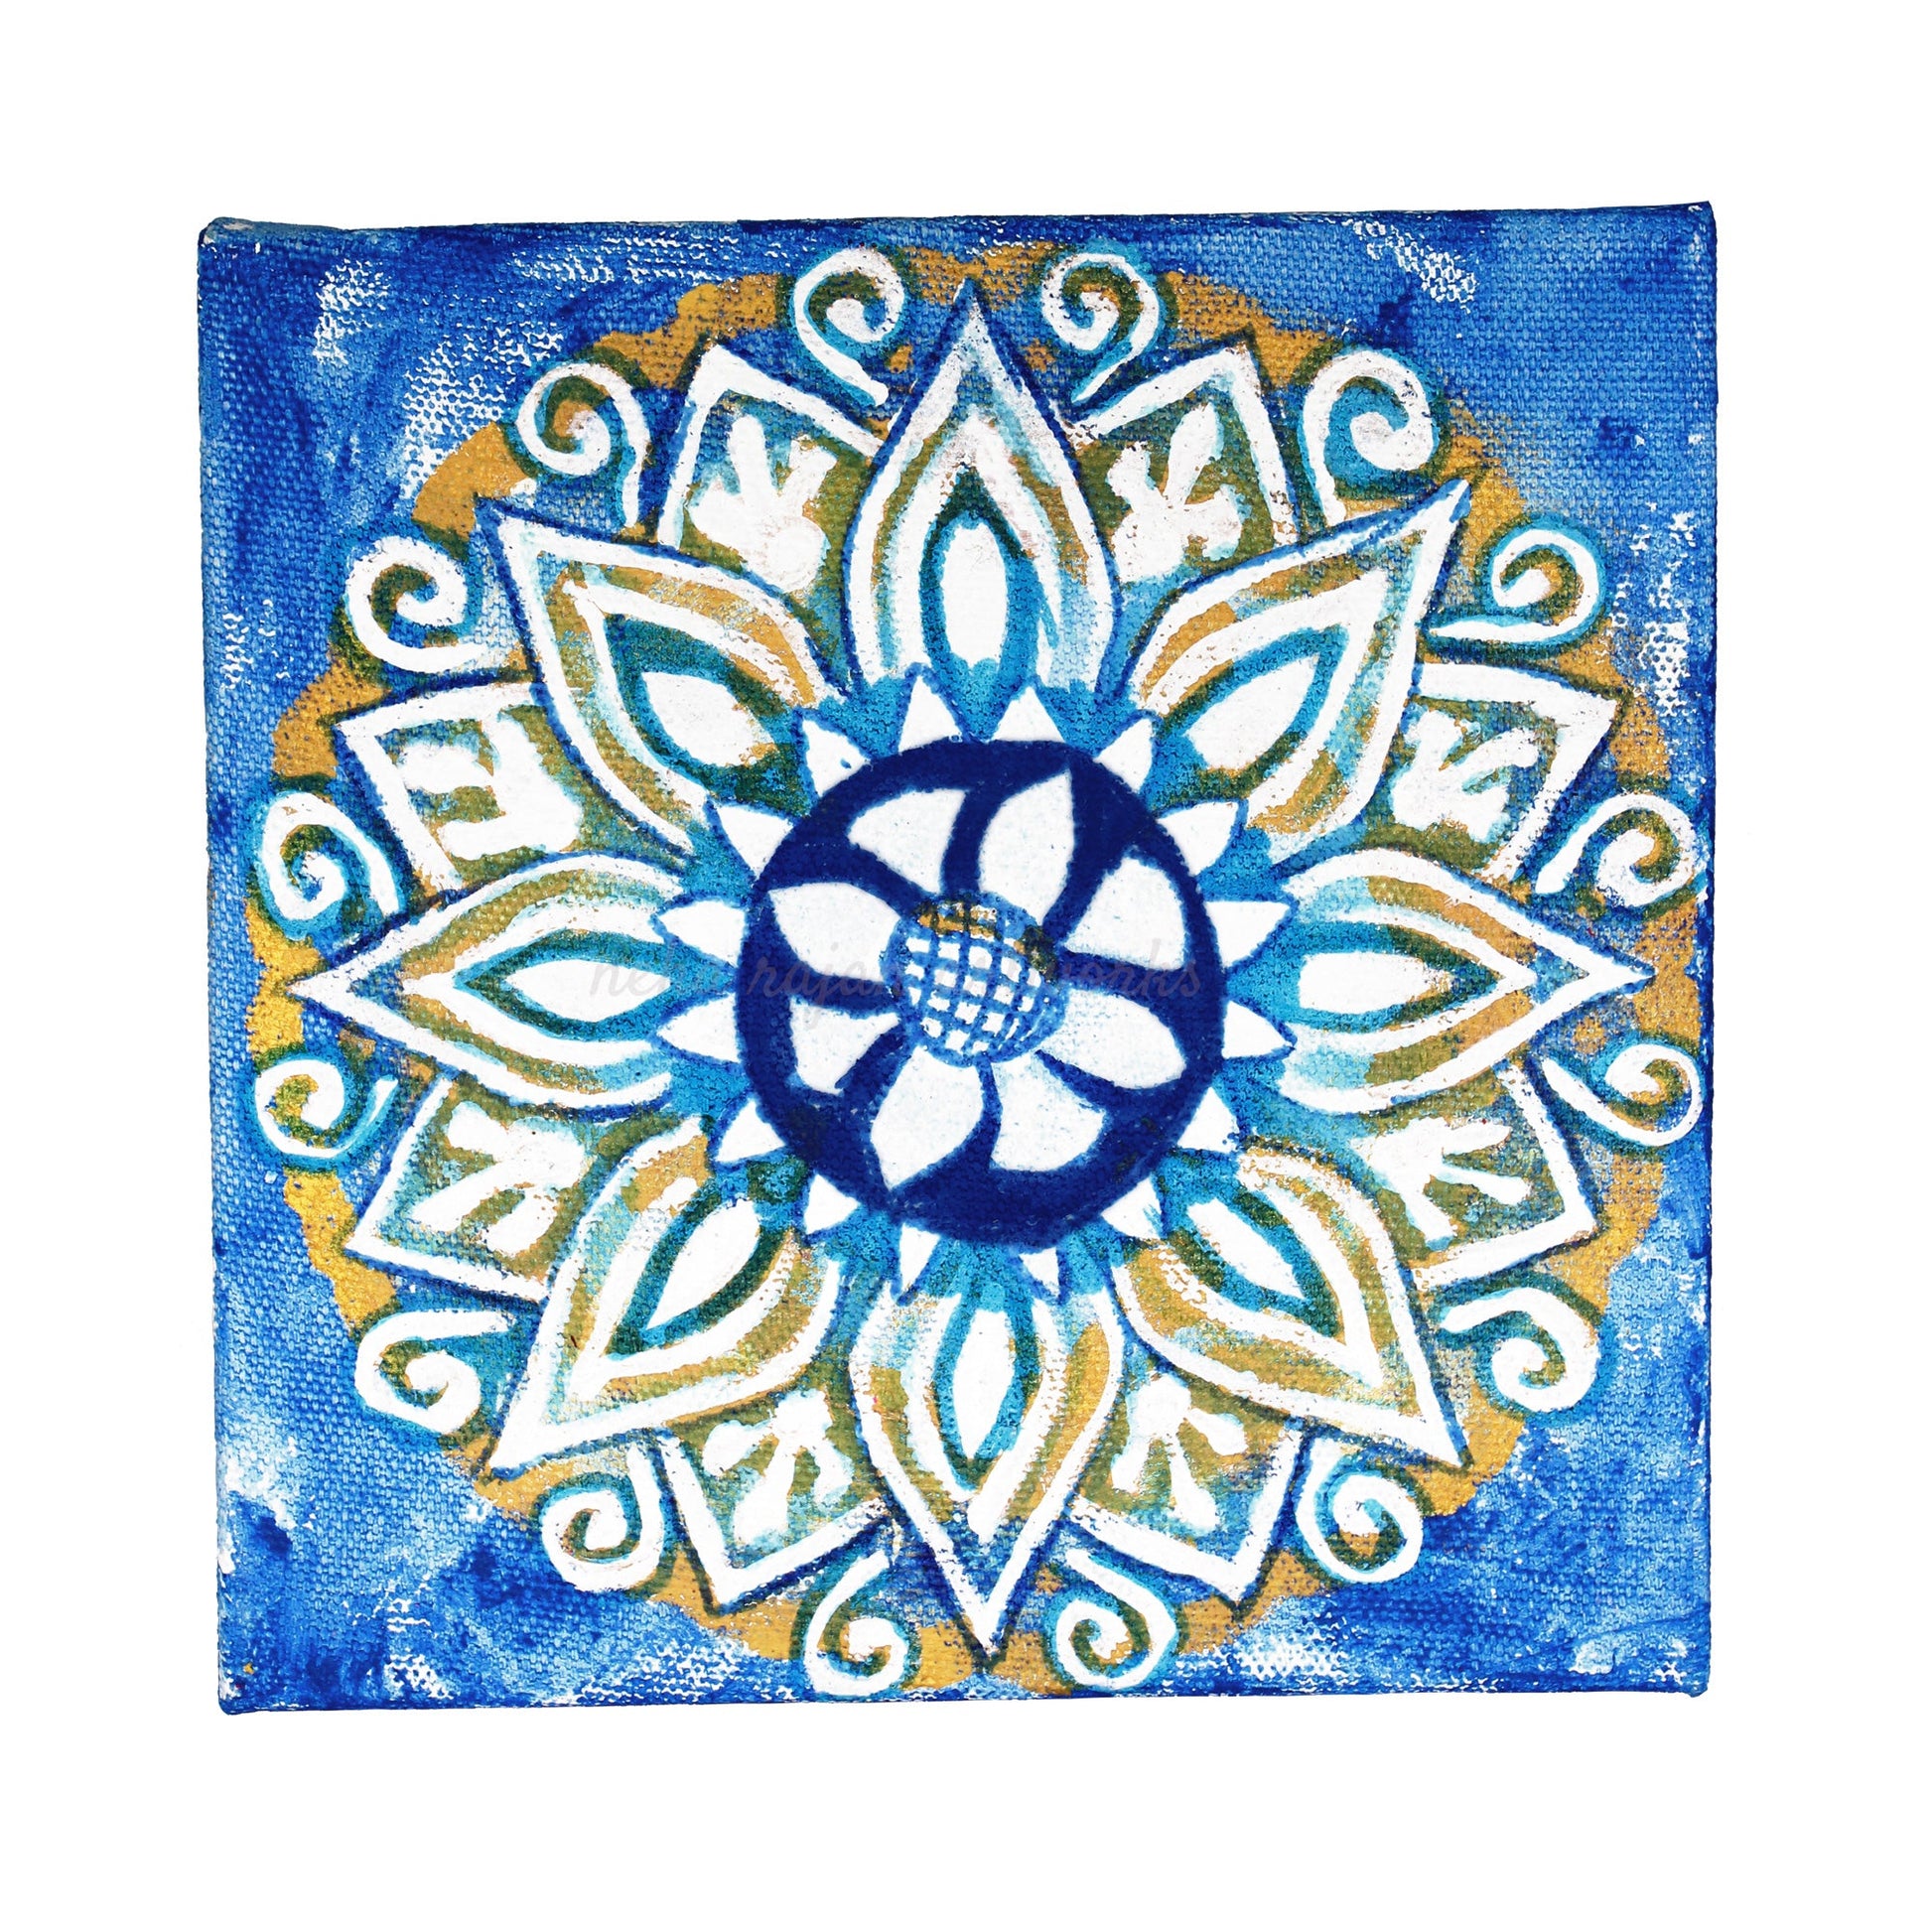 Neha Rajan Artworks Original Handmade Blue Rangoli Mandala Painting Hand Painted On Canvas Frame 6*6